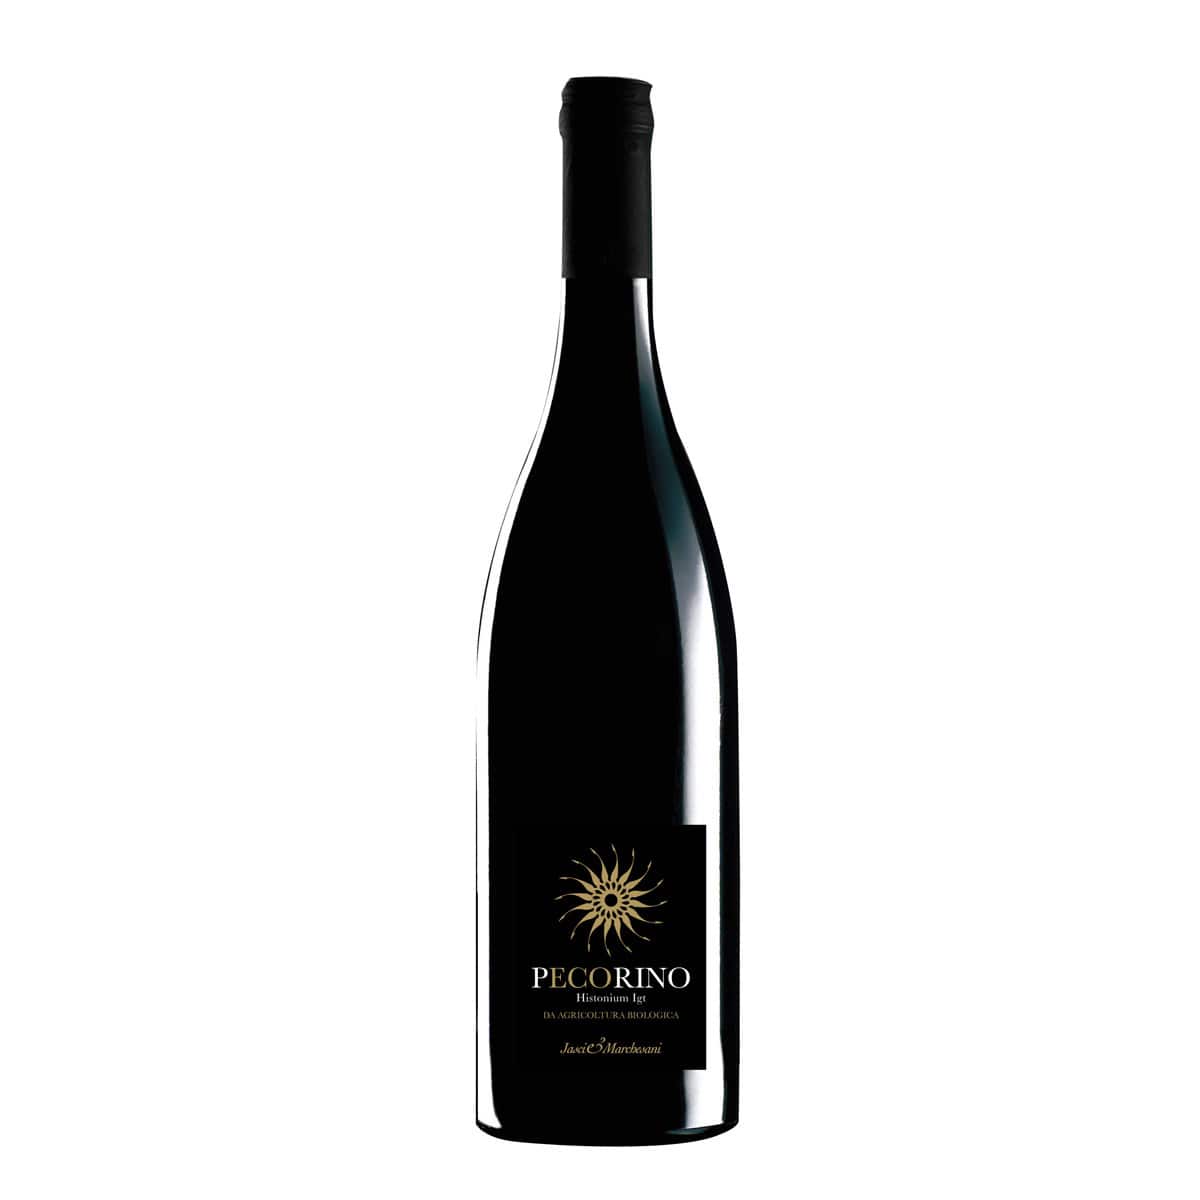 Pecorino Histonium IGT, Vini dell'Umbria - Privilege Wine